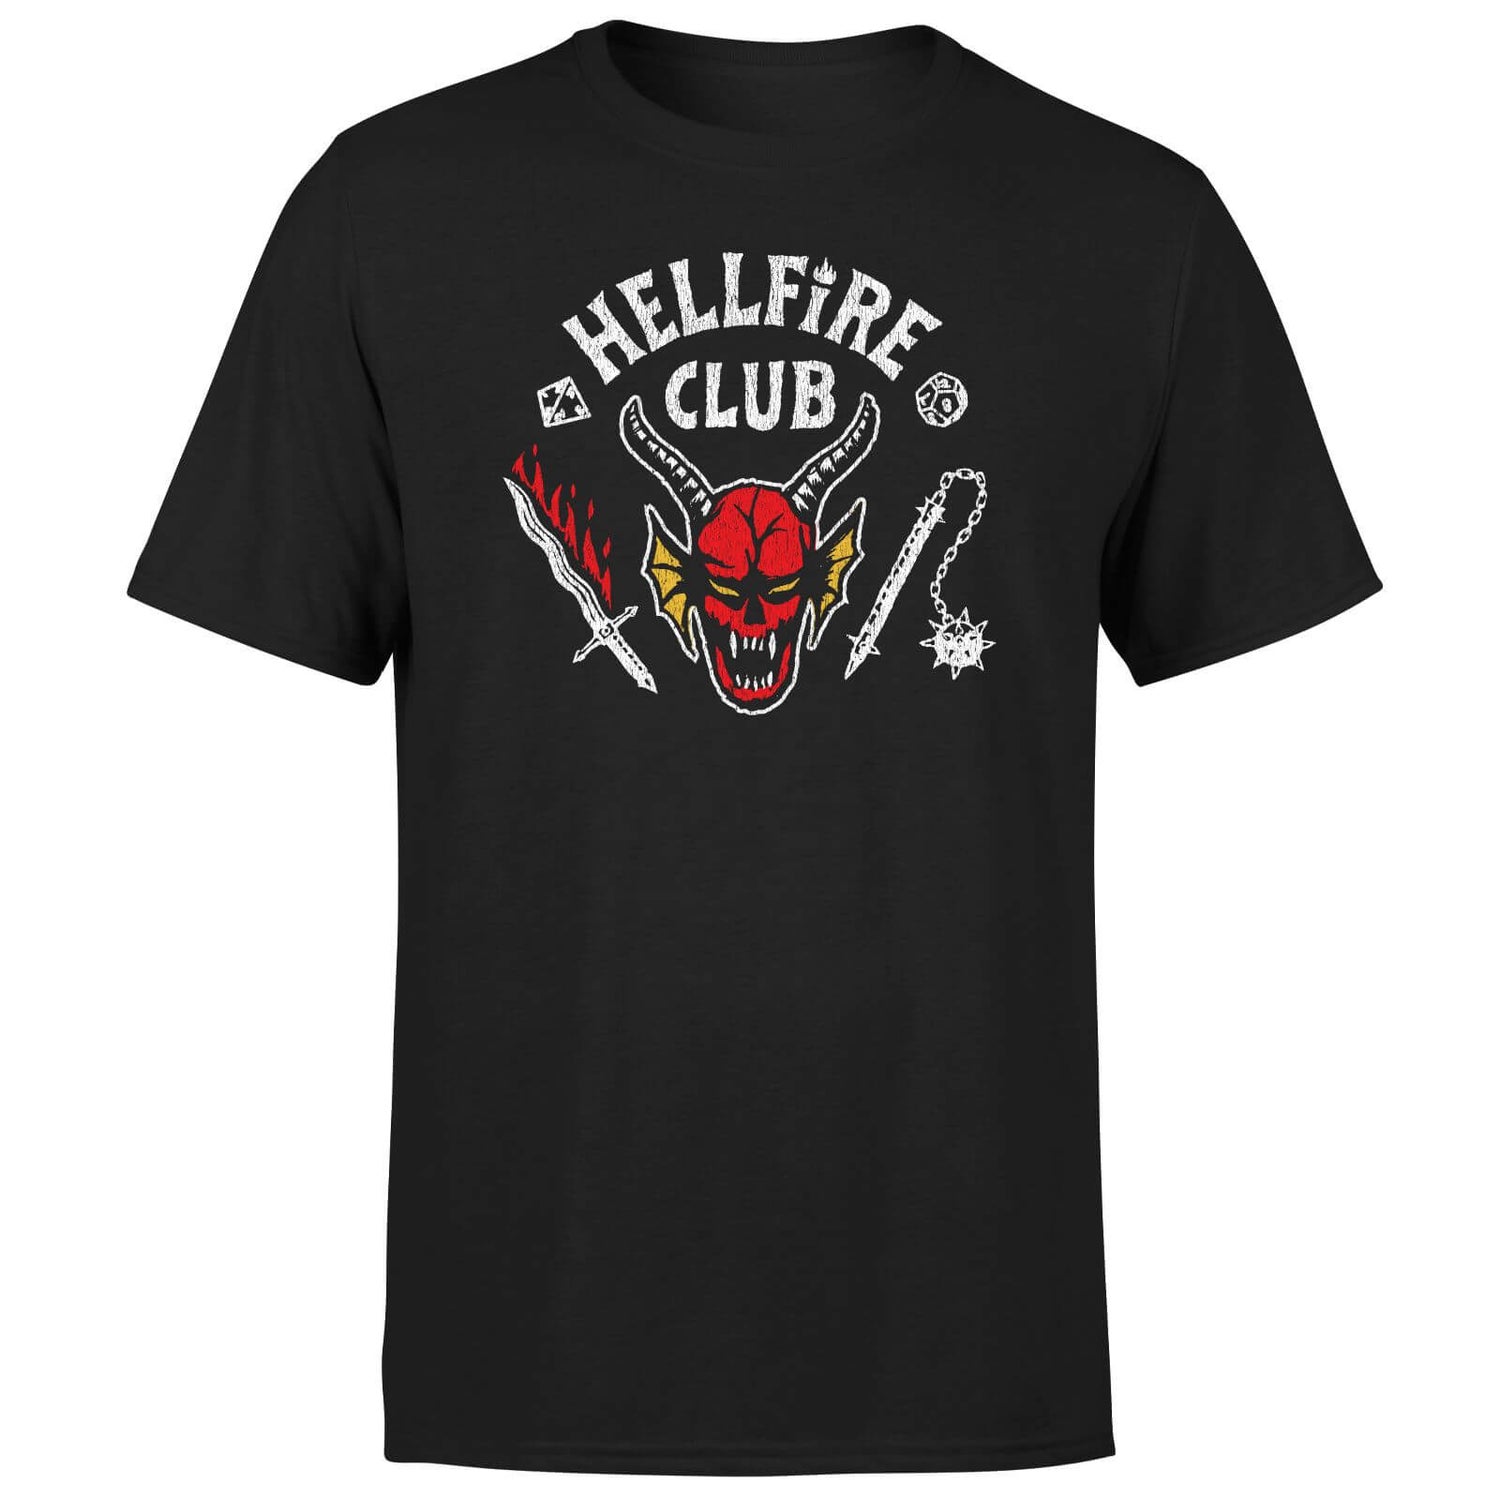 Camiseta unisex vintage Hellfire Club de Stranger Things - Negro